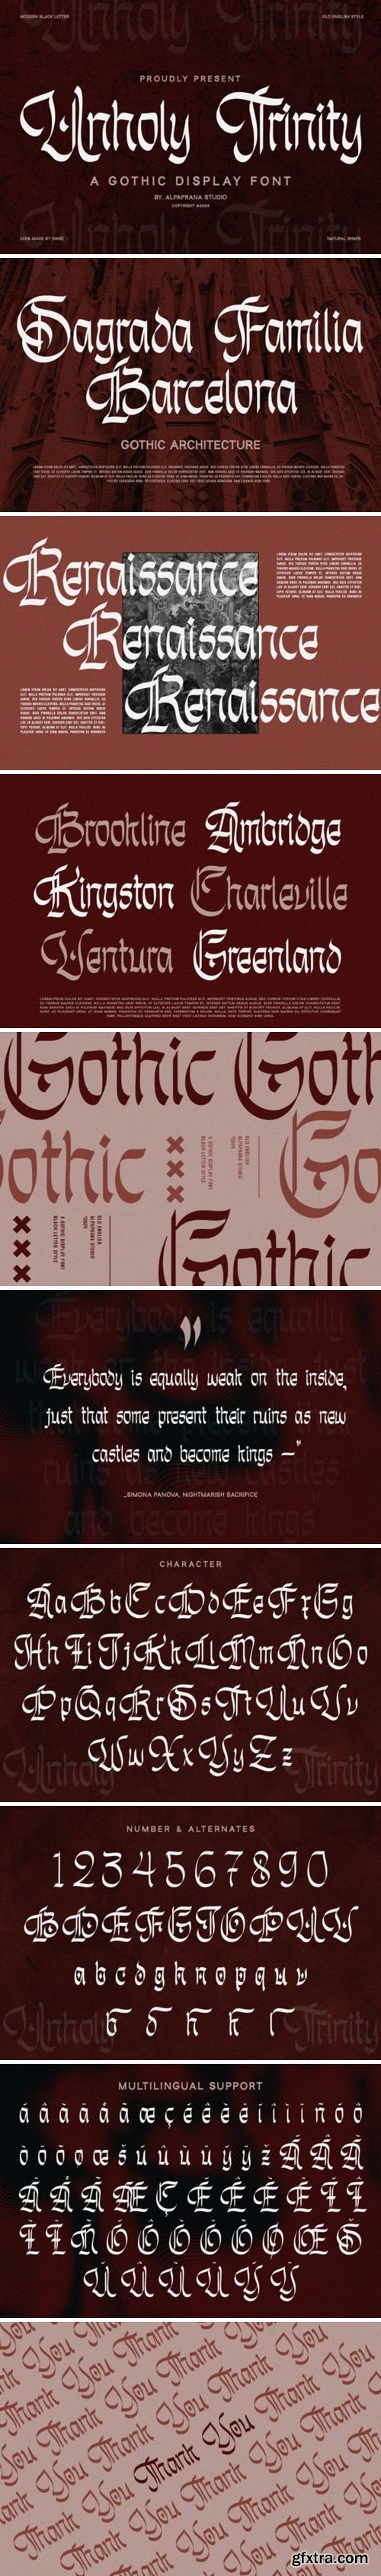 CM - Unholy Trinity - Gothic Display 92513593